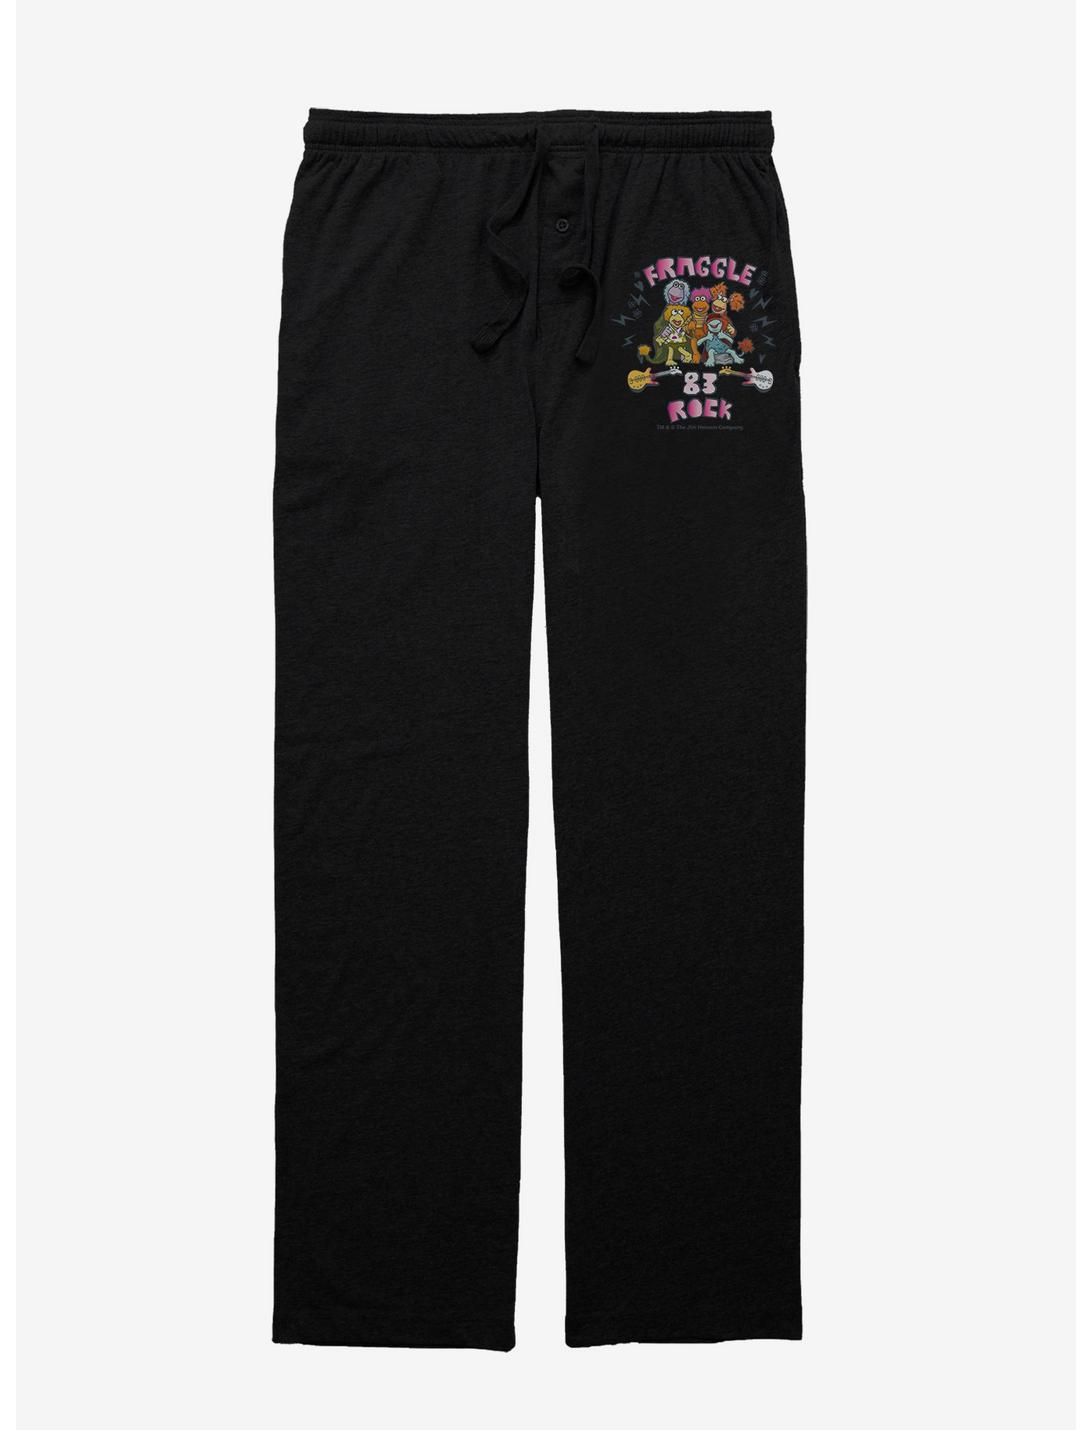 Jim Henson's Fraggle Rock Fraggle Rock 83 Pajama Pants, BLACK, hi-res